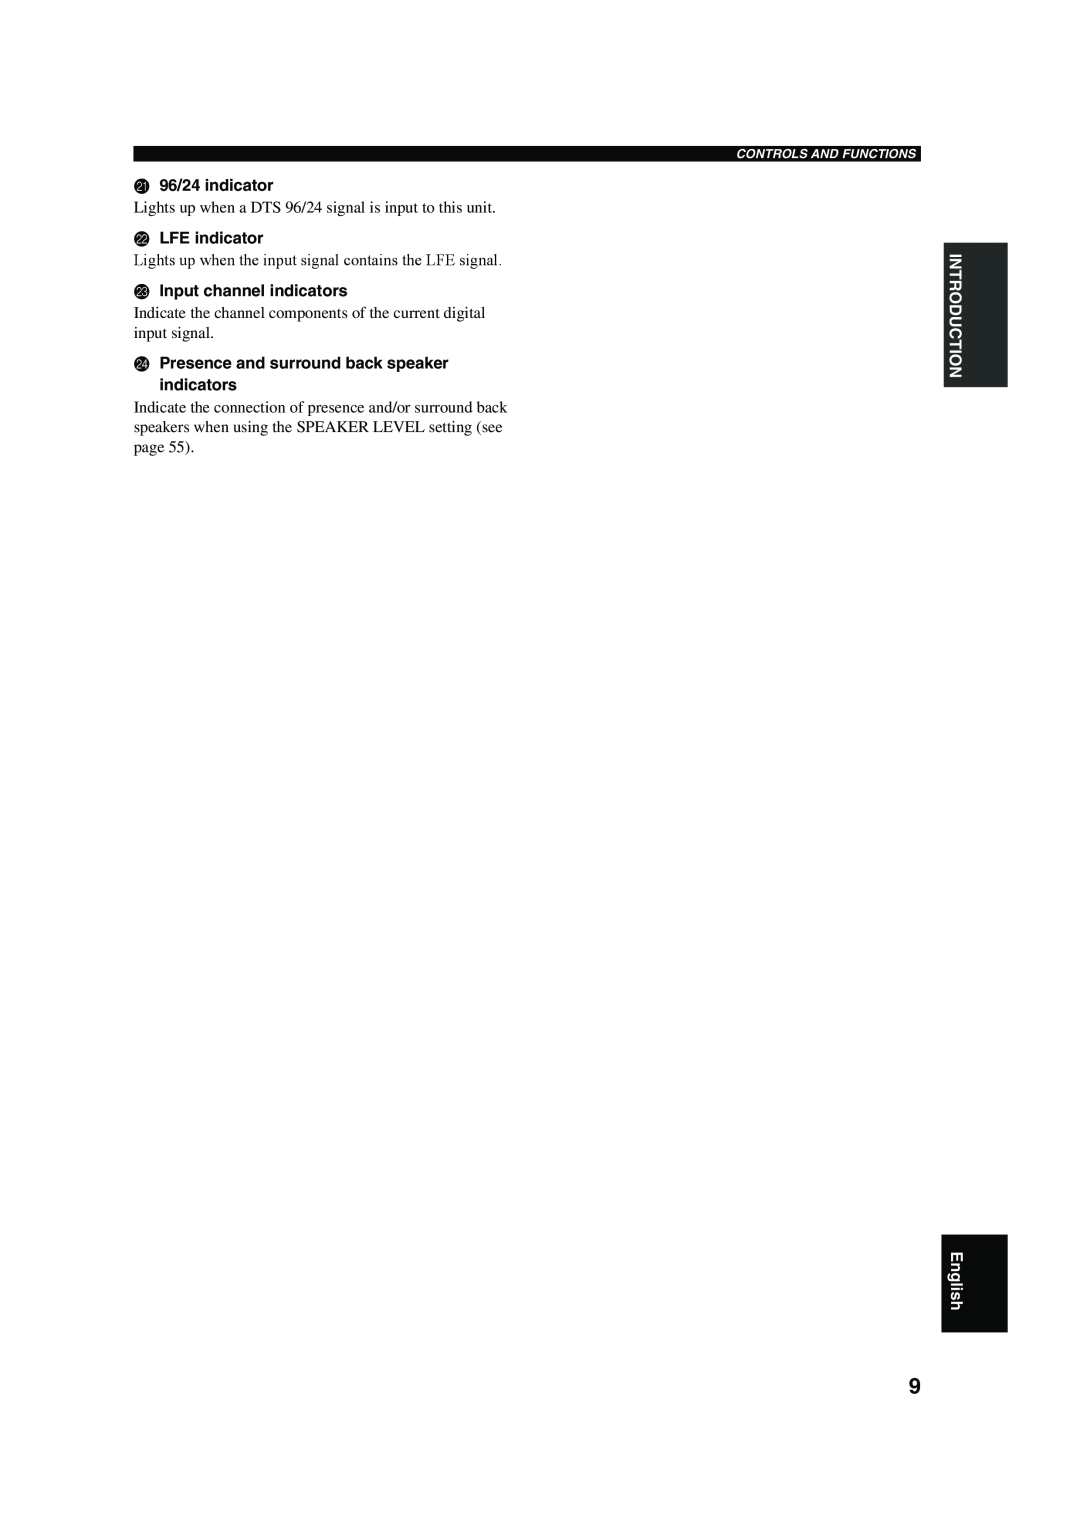 Yamaha HTR-5760 owner manual K96/24 indicator, LLFE indicator, MInput channel indicators 